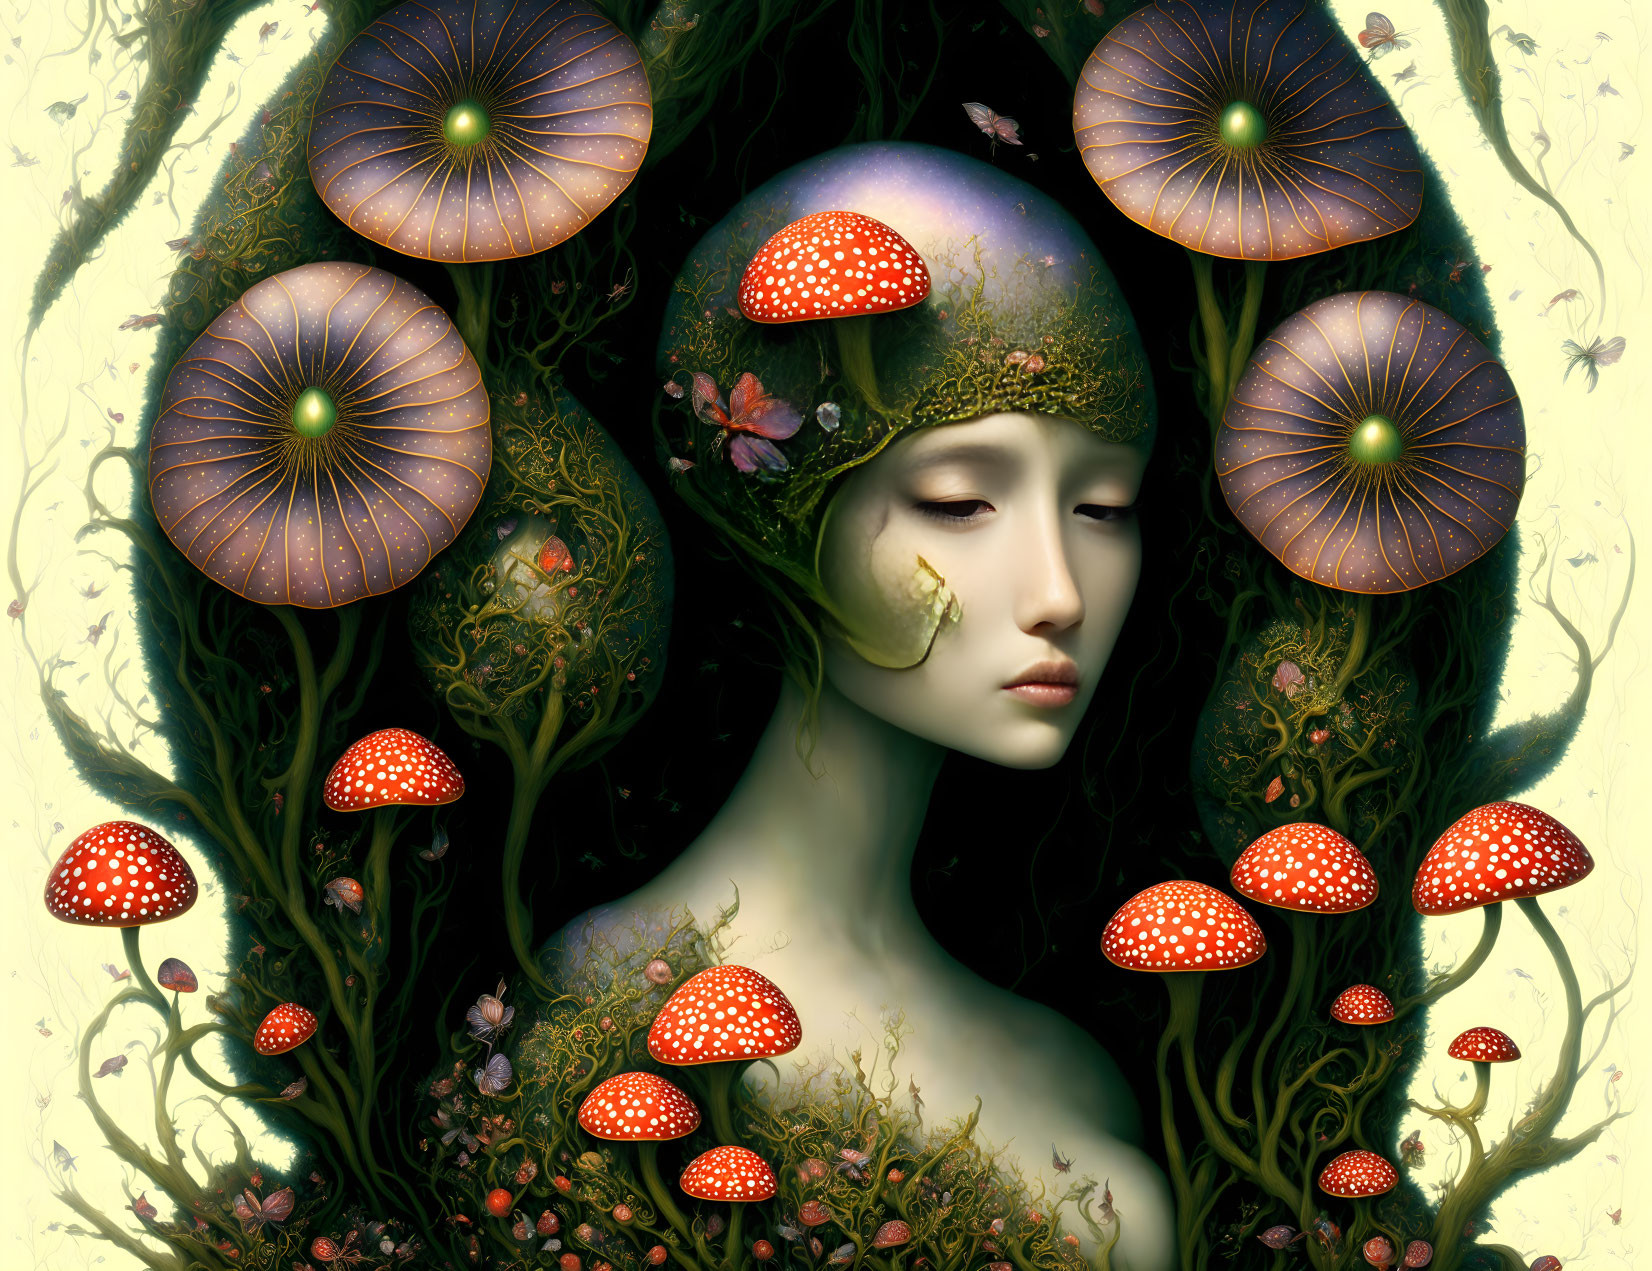 Surreal female portrait with mushrooms, vegetation, and cosmic headpiece